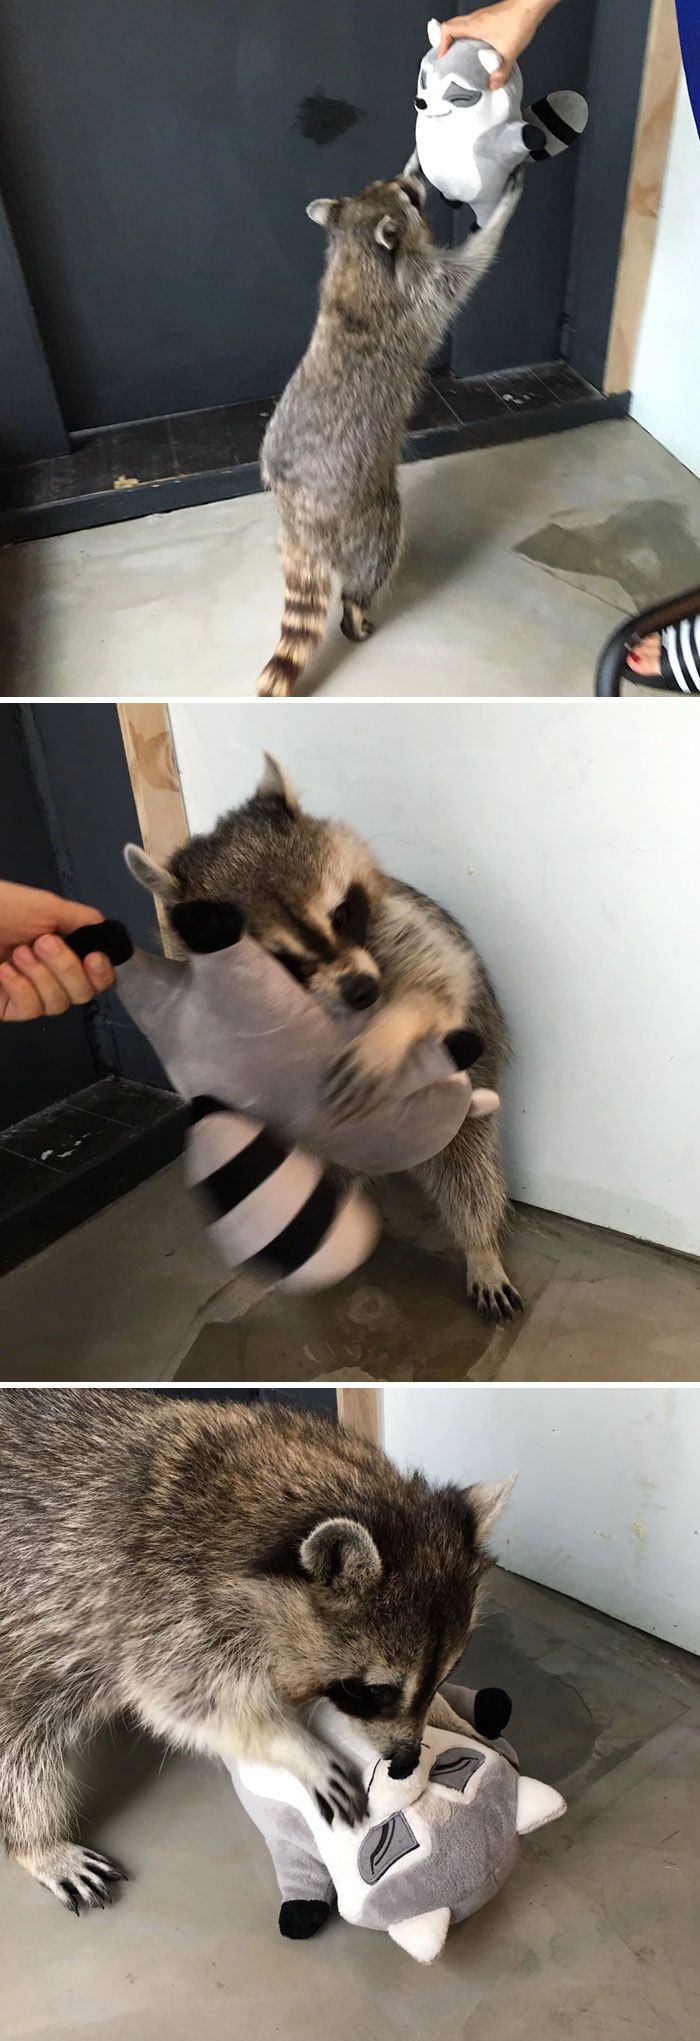 Cute Raccoon